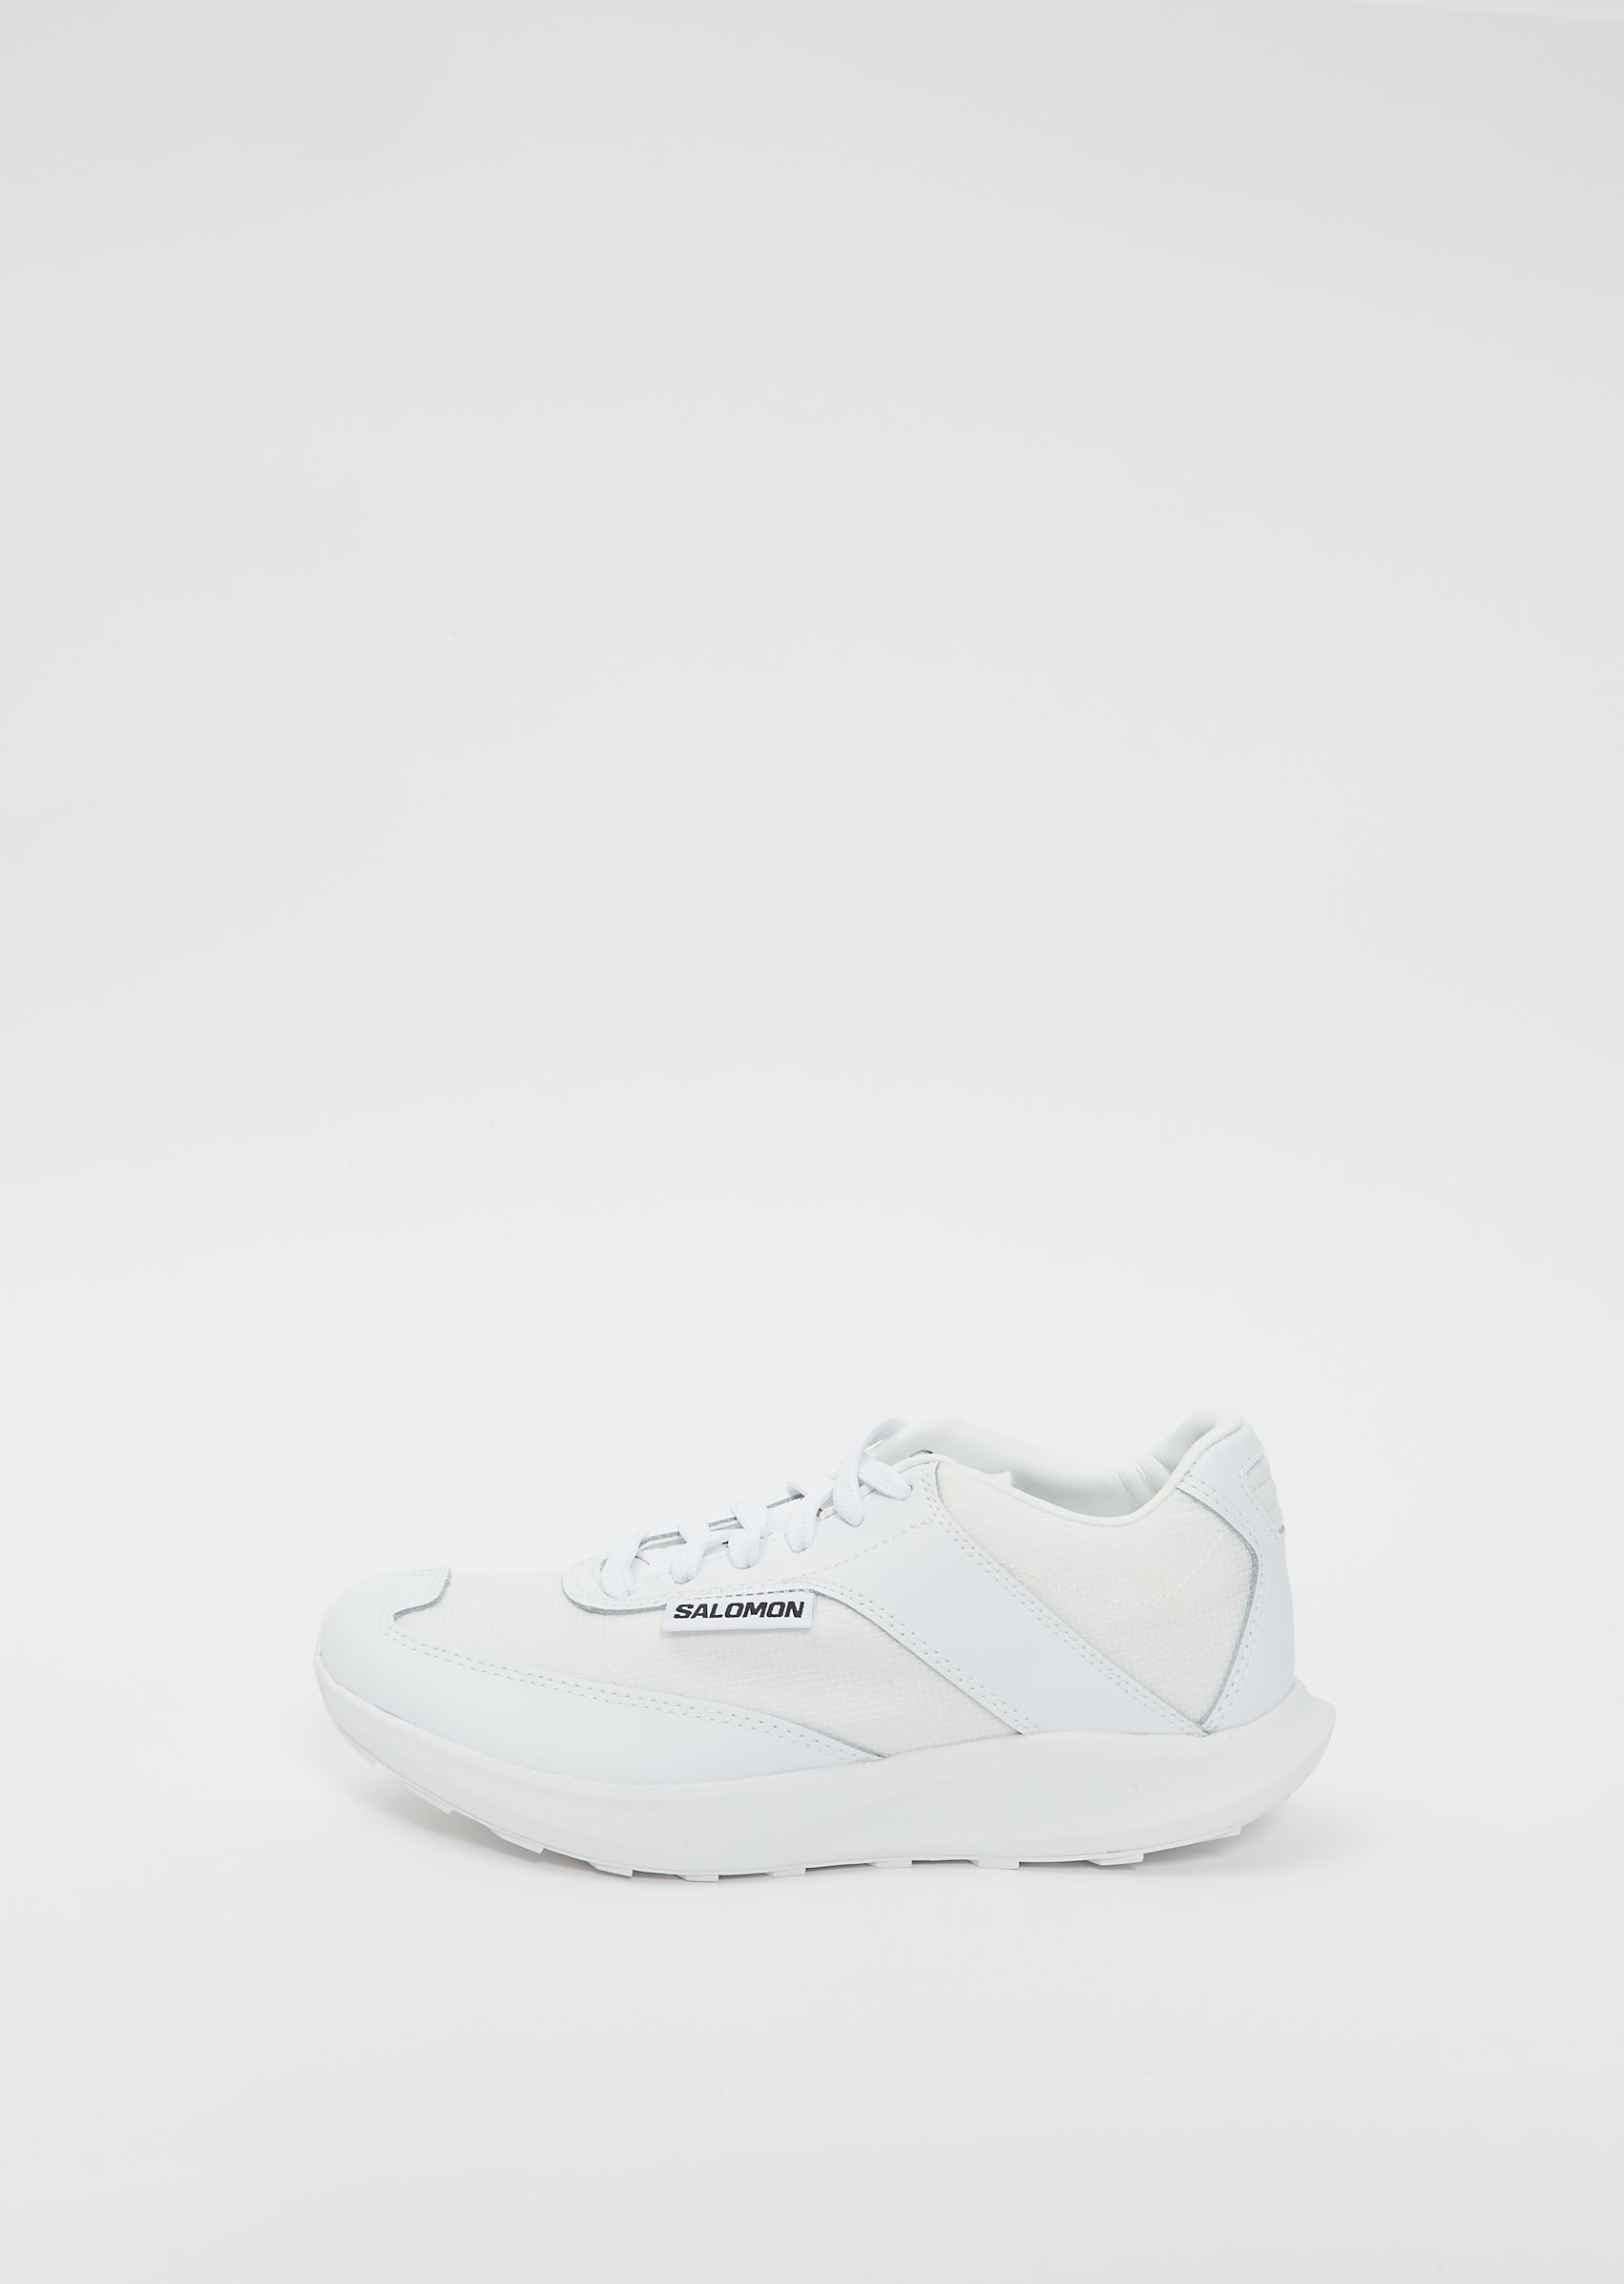 knal Onvermijdelijk Spuug uit Comme des Garçons x Salomon SR90 Sneaker — White – La Garçonne